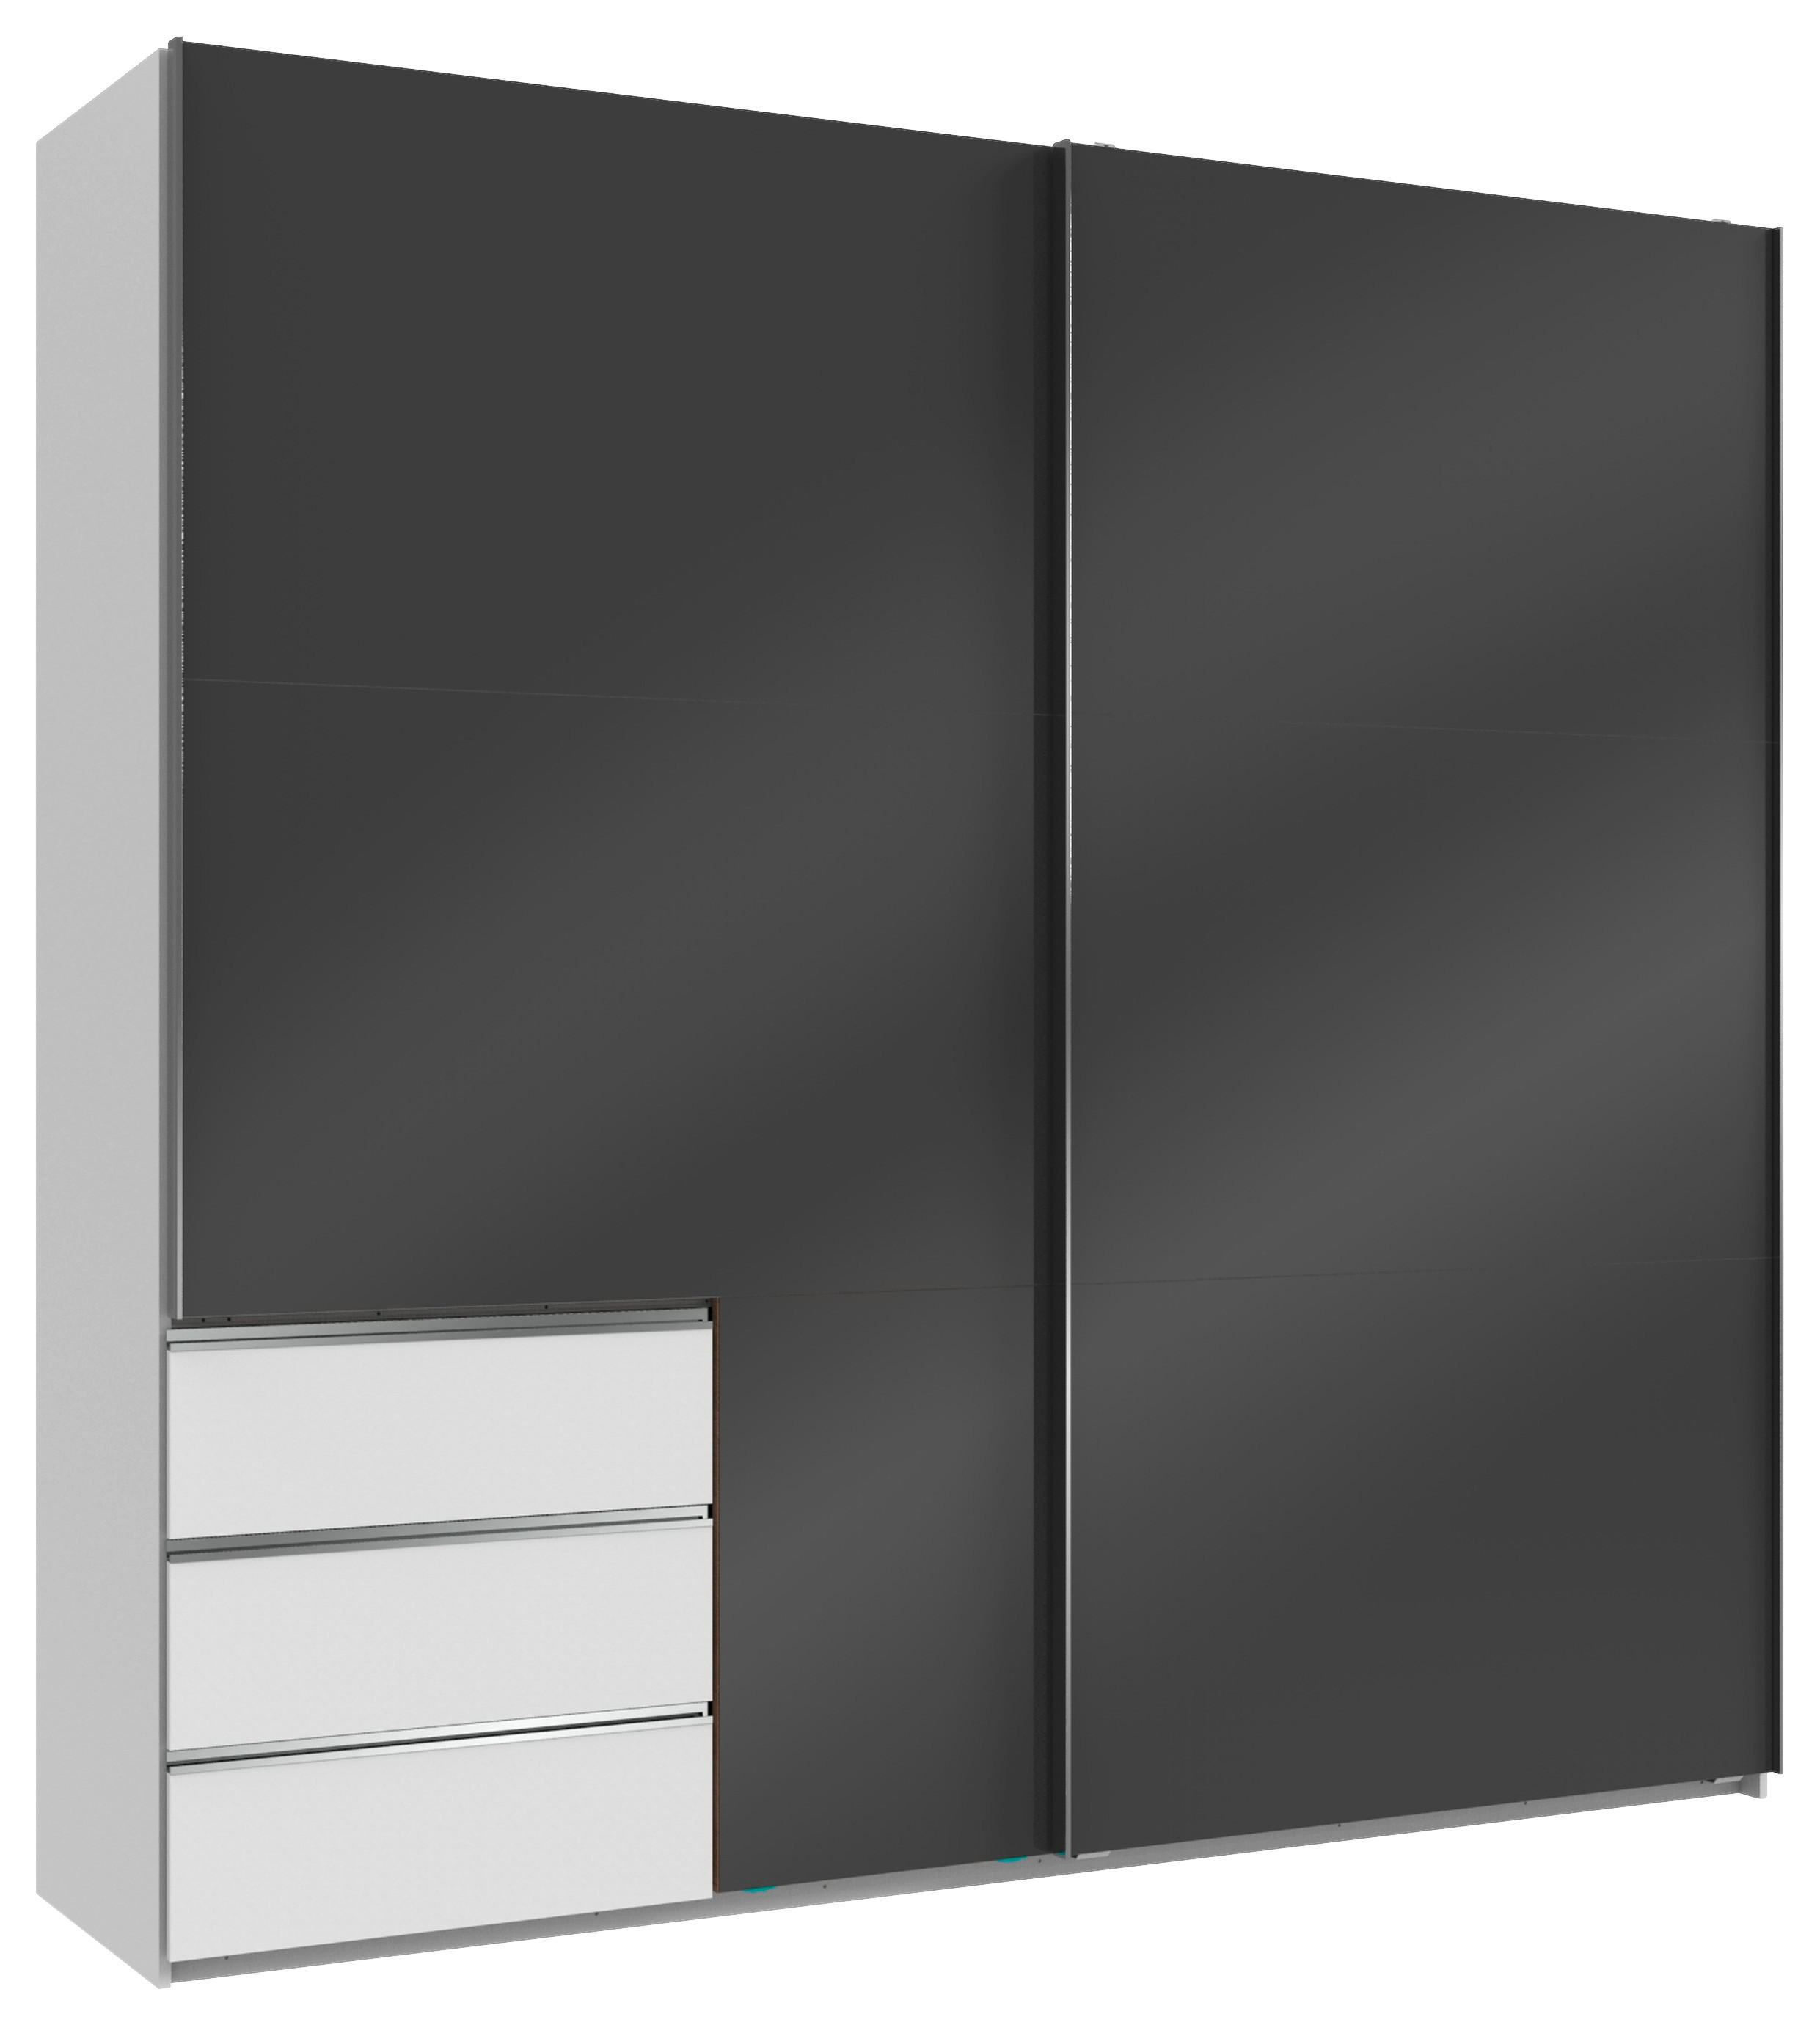 SCHWEBETÜRENSCHRANK 2-türig Grau, Weiß  - Chromfarben/Weiß, MODERN (250/236/65cm) - MID.YOU